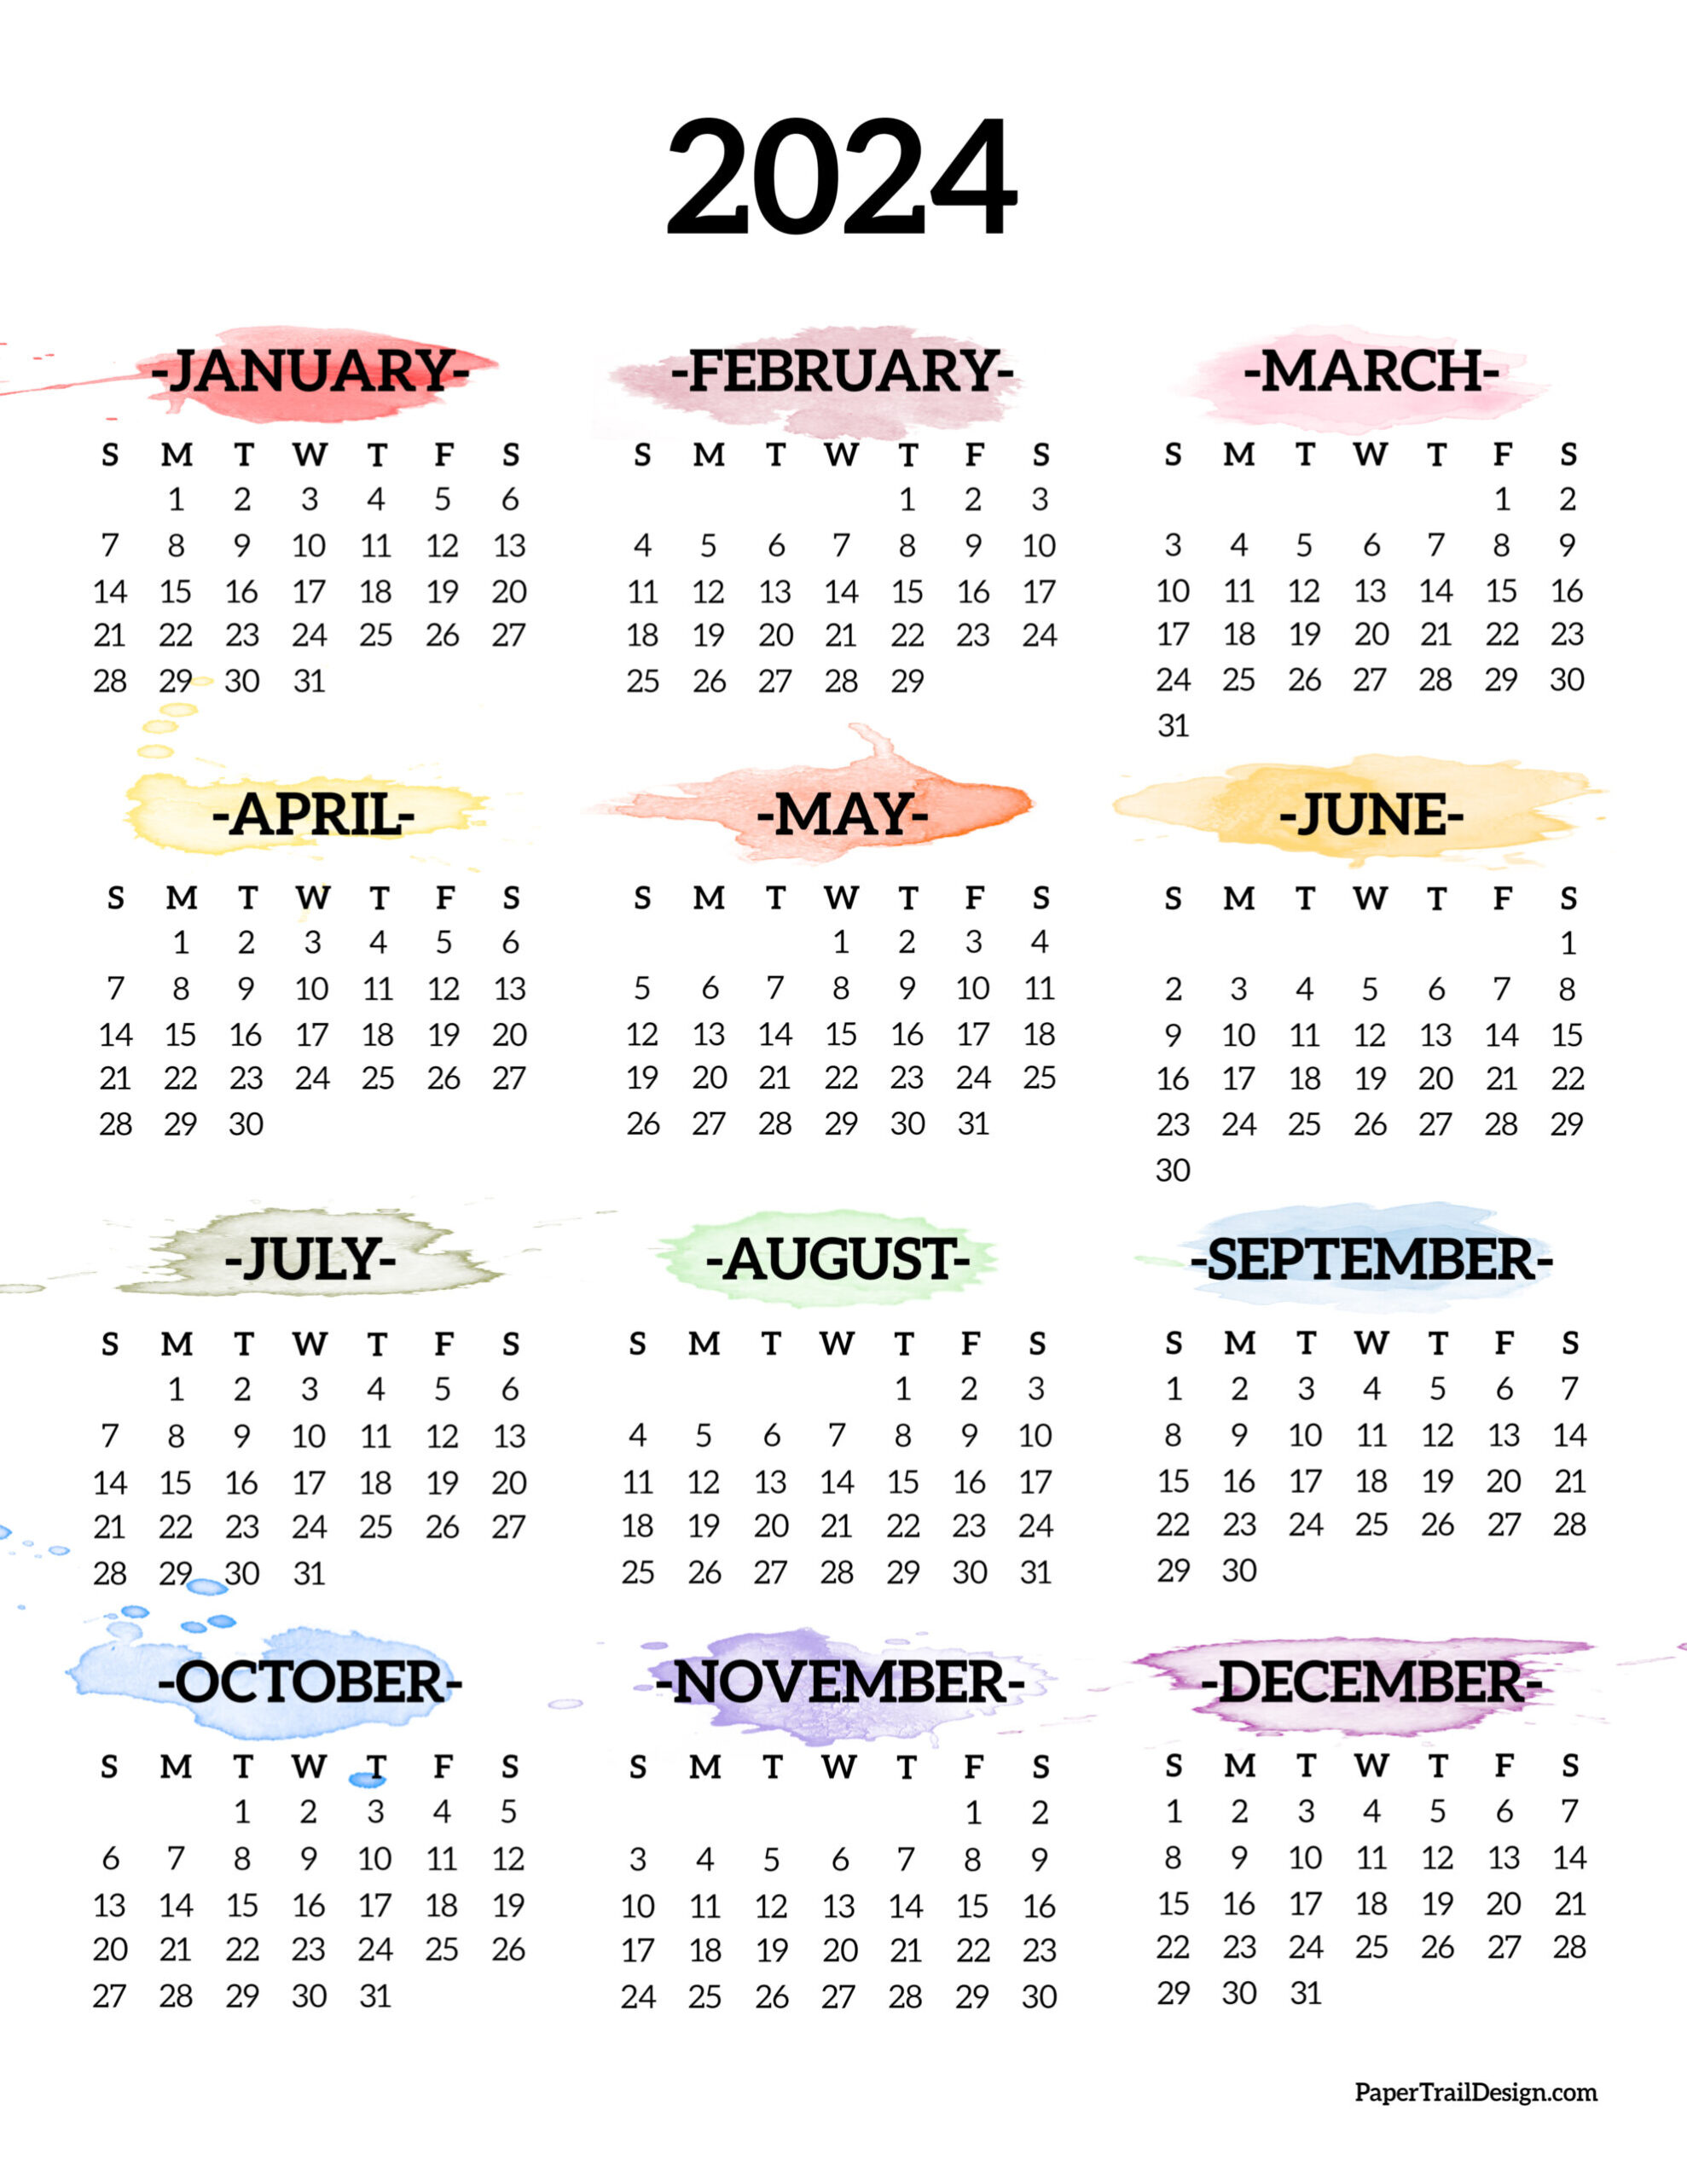 Calendar 2024 Printable One Page - Paper Trail Design for Calendar 2024 2024 Printable